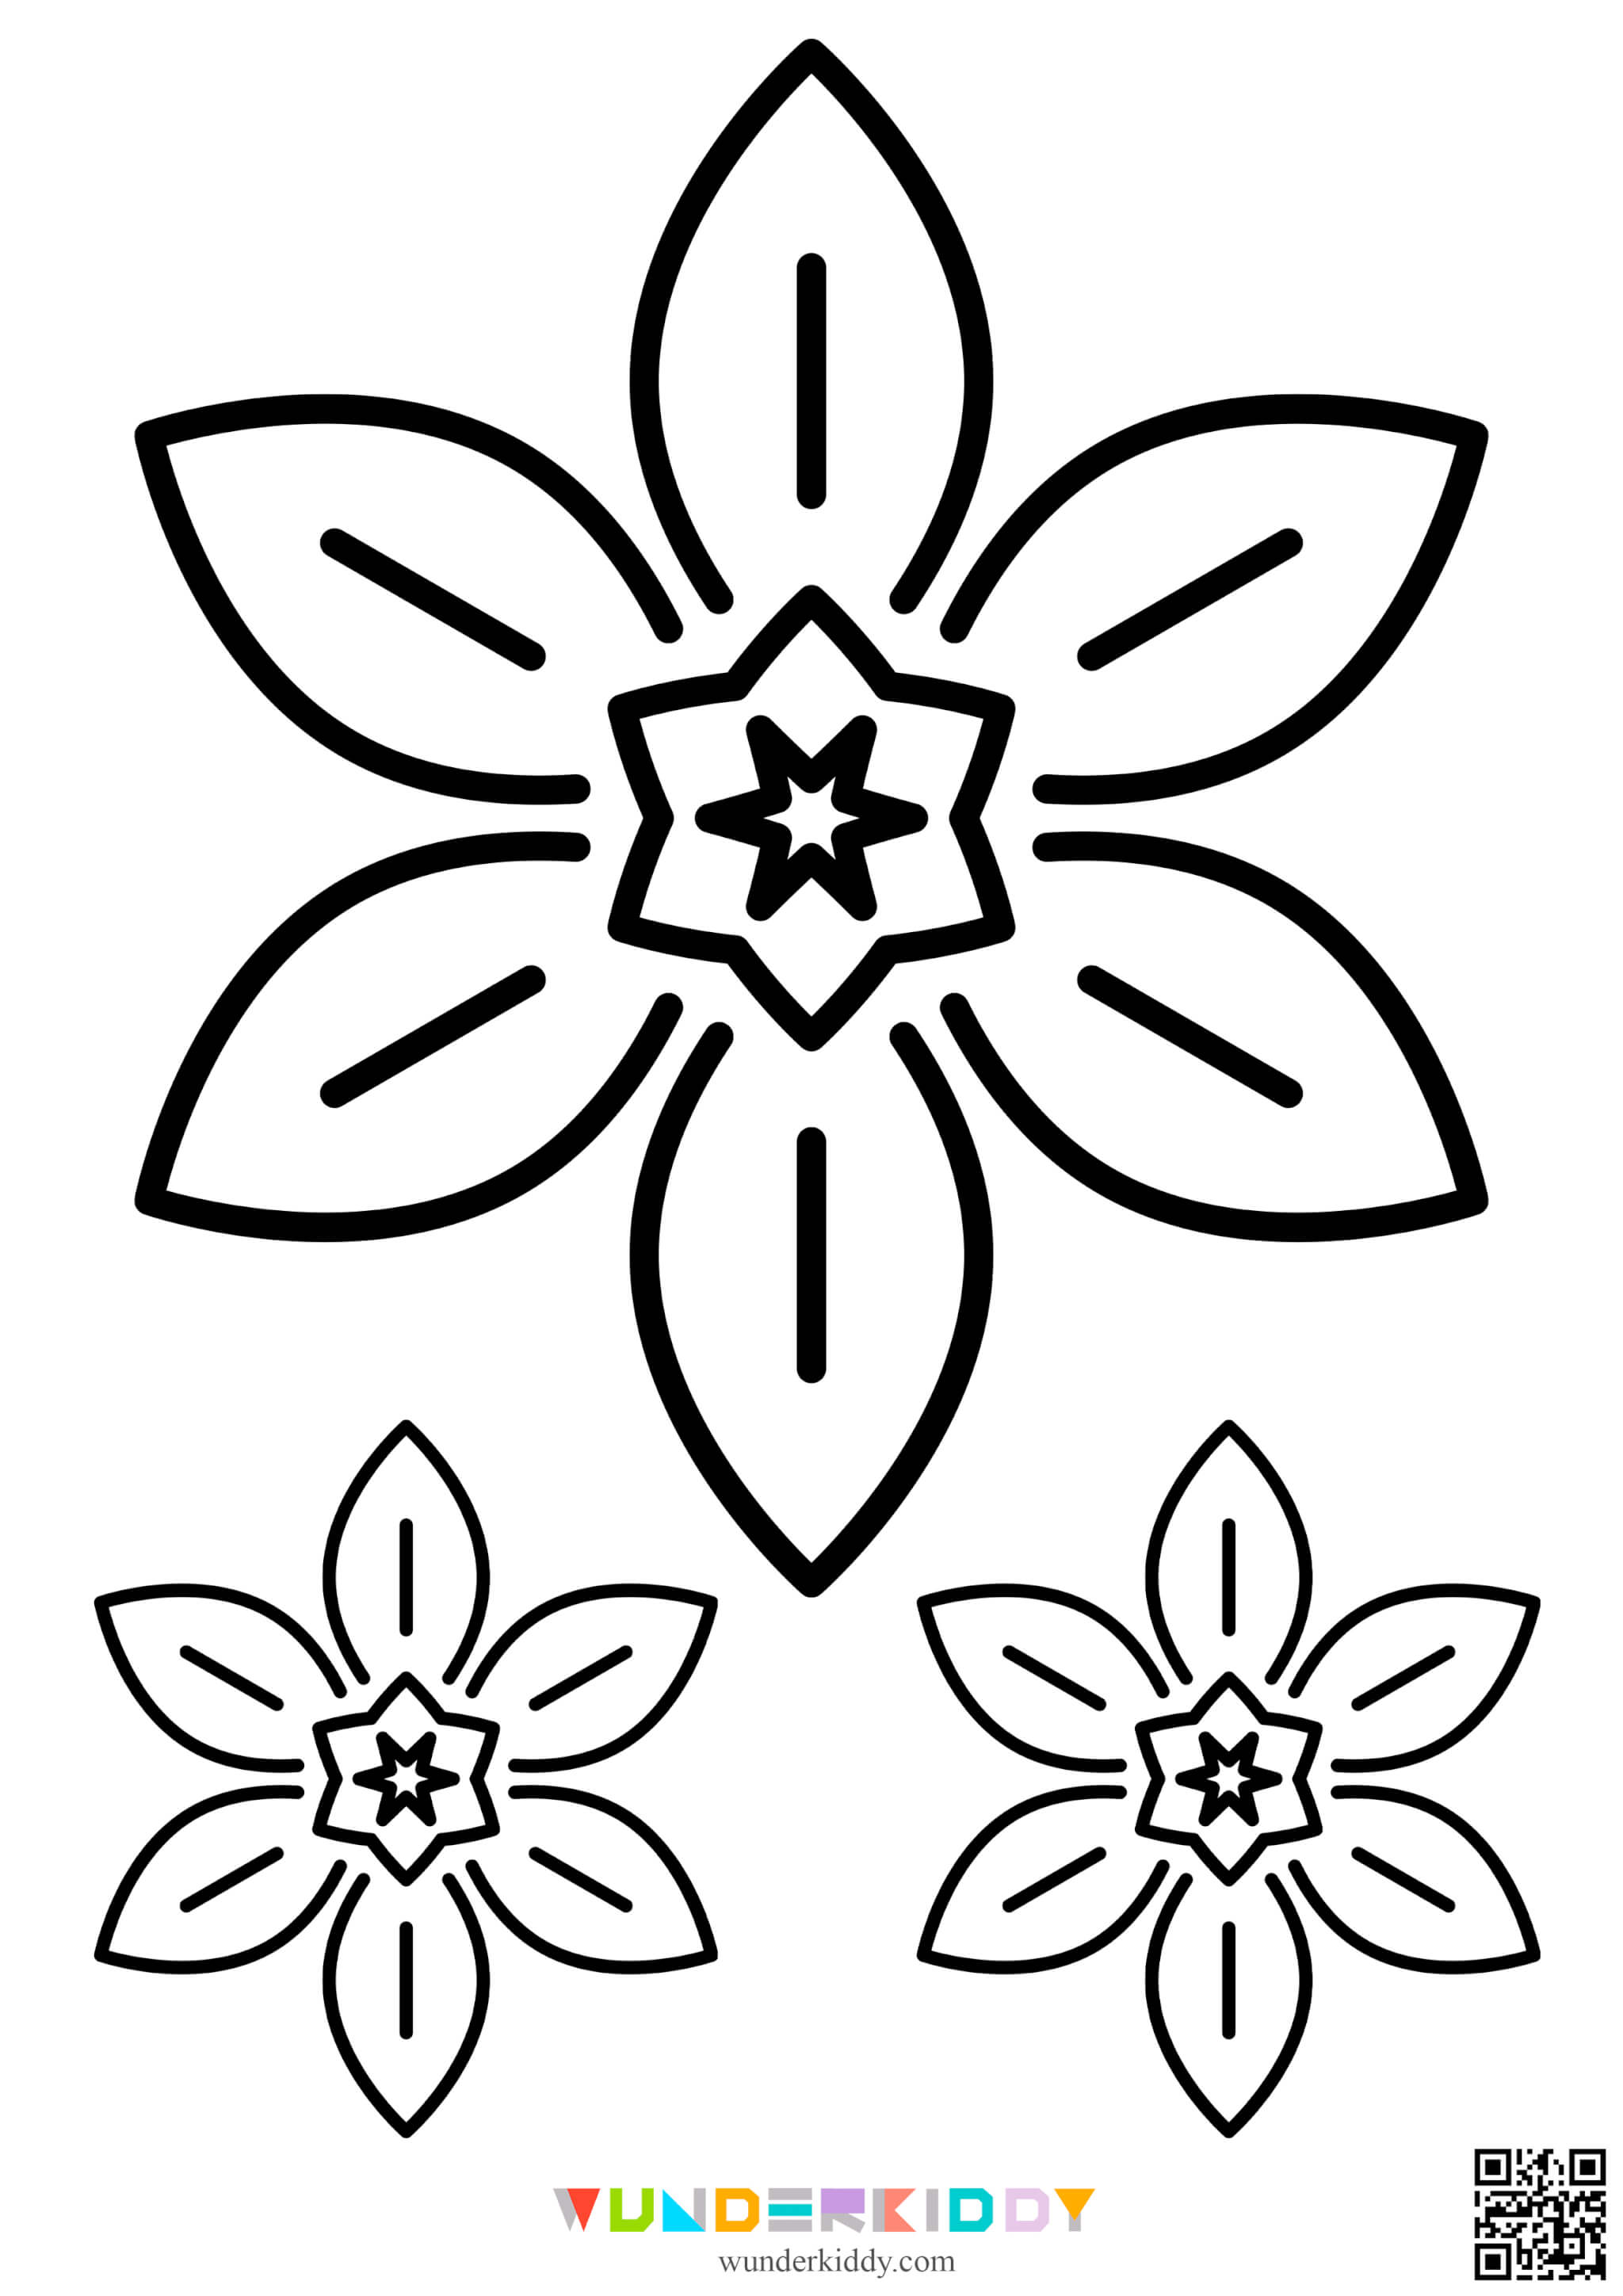 Simple Flower Templates - Image 11